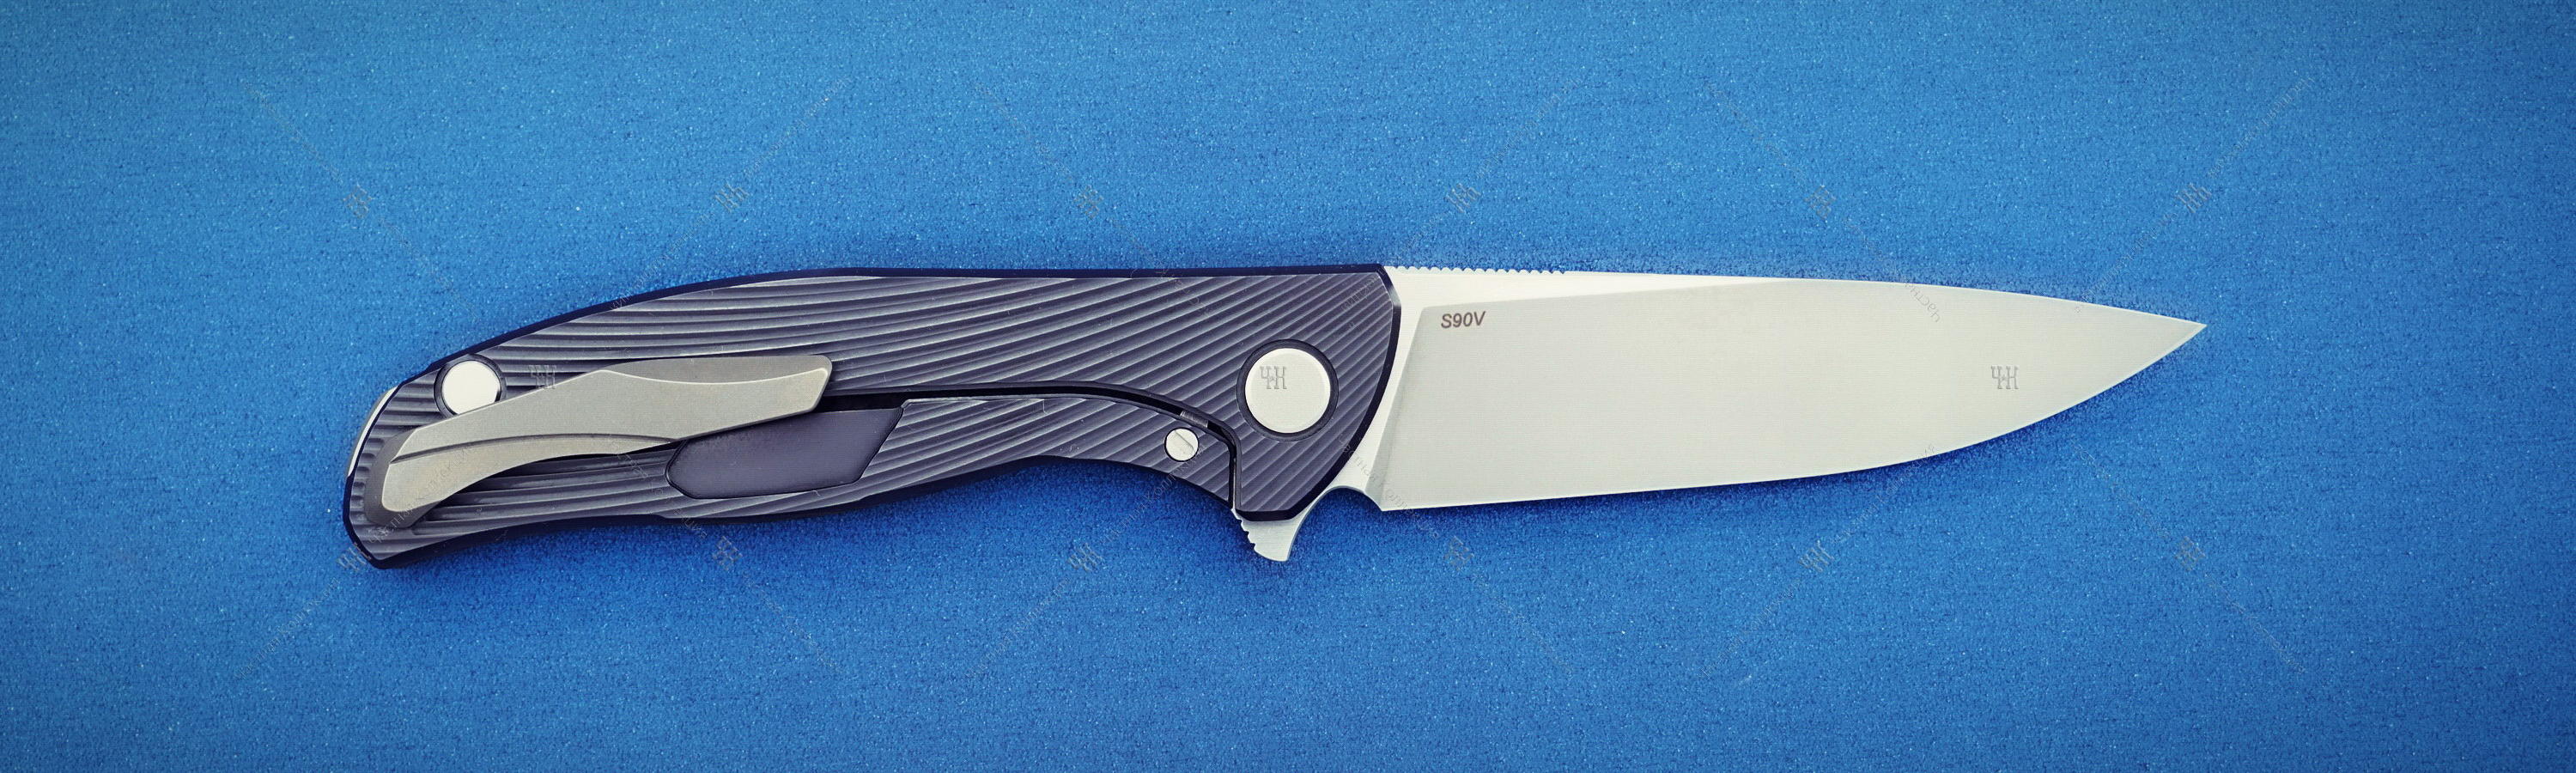 S90V Blade